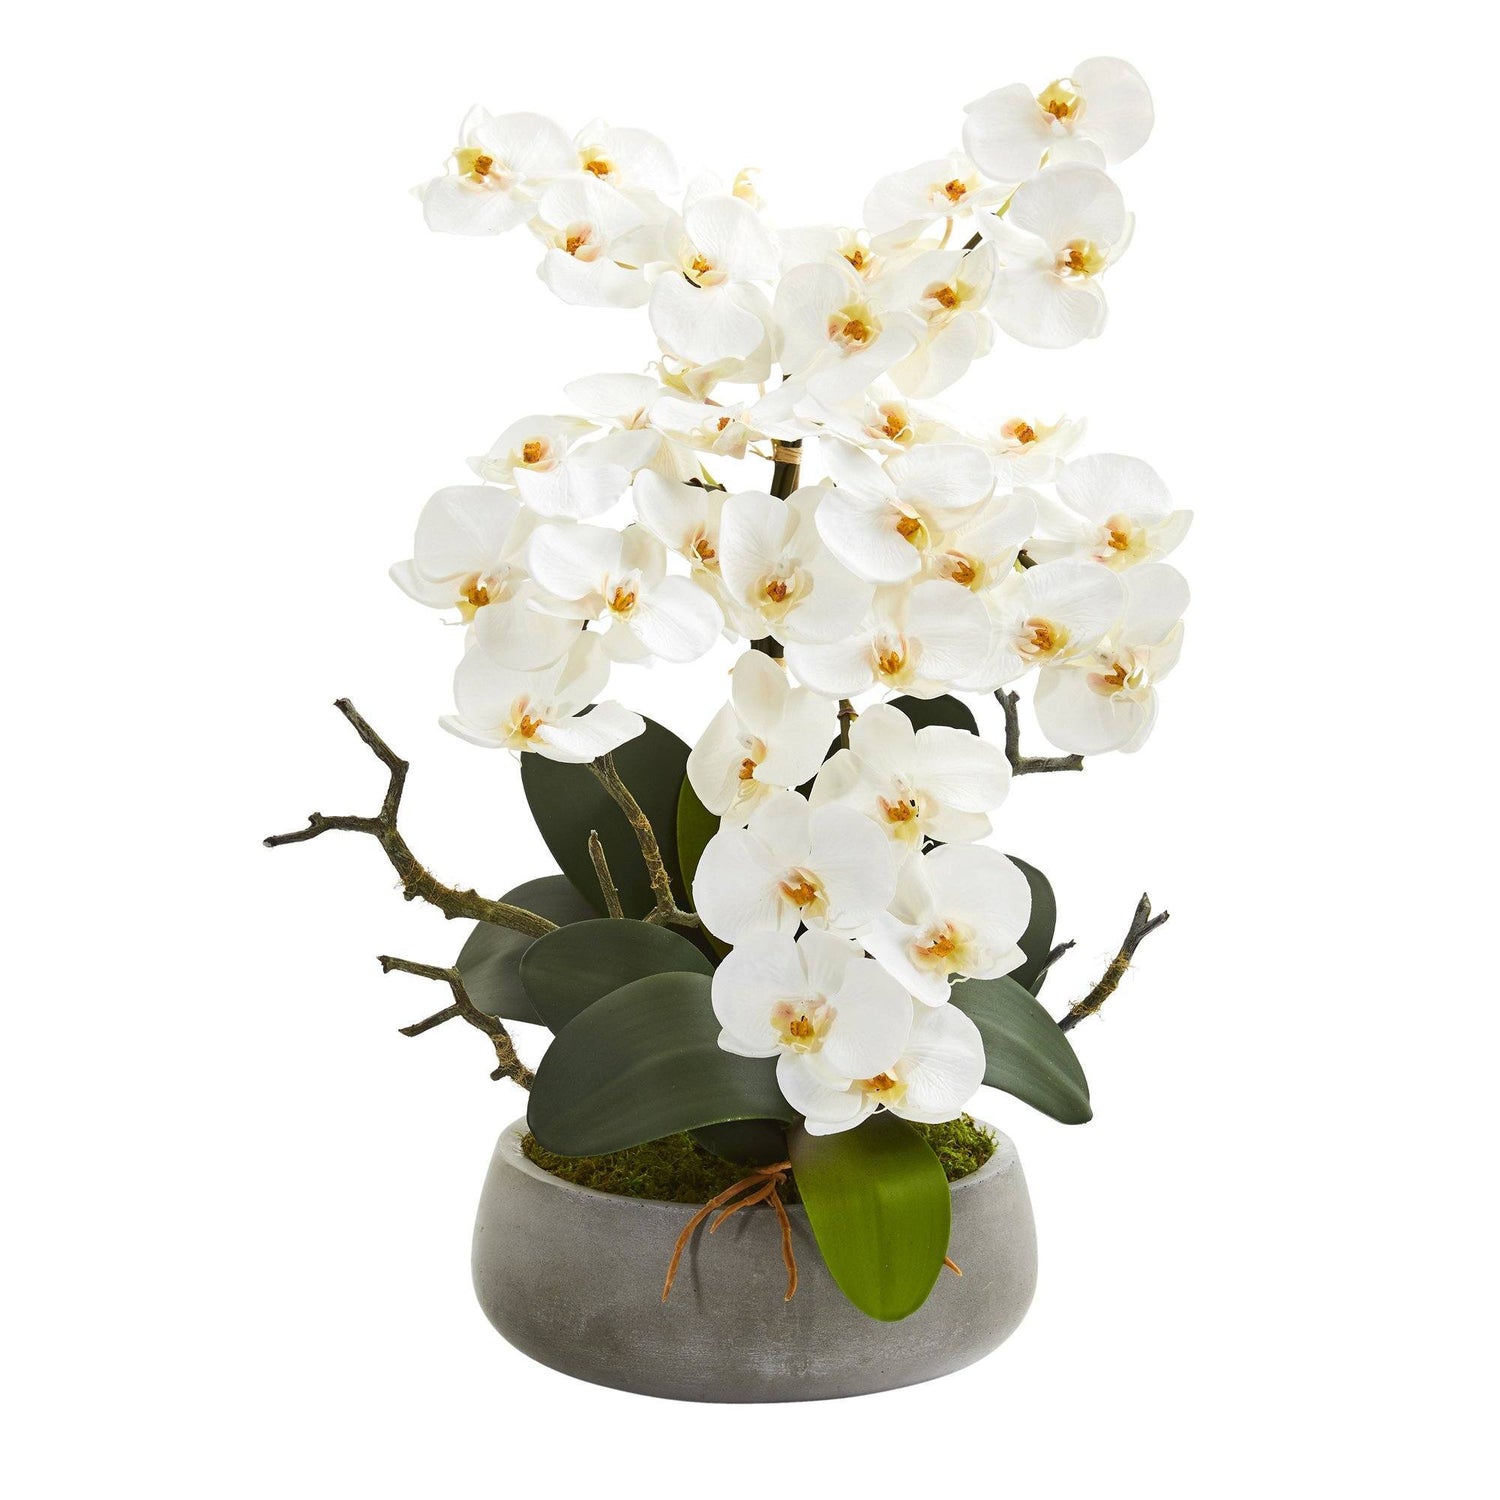 21” Phalaenopsis Orchid Artificial Arrangement in Gray Vase